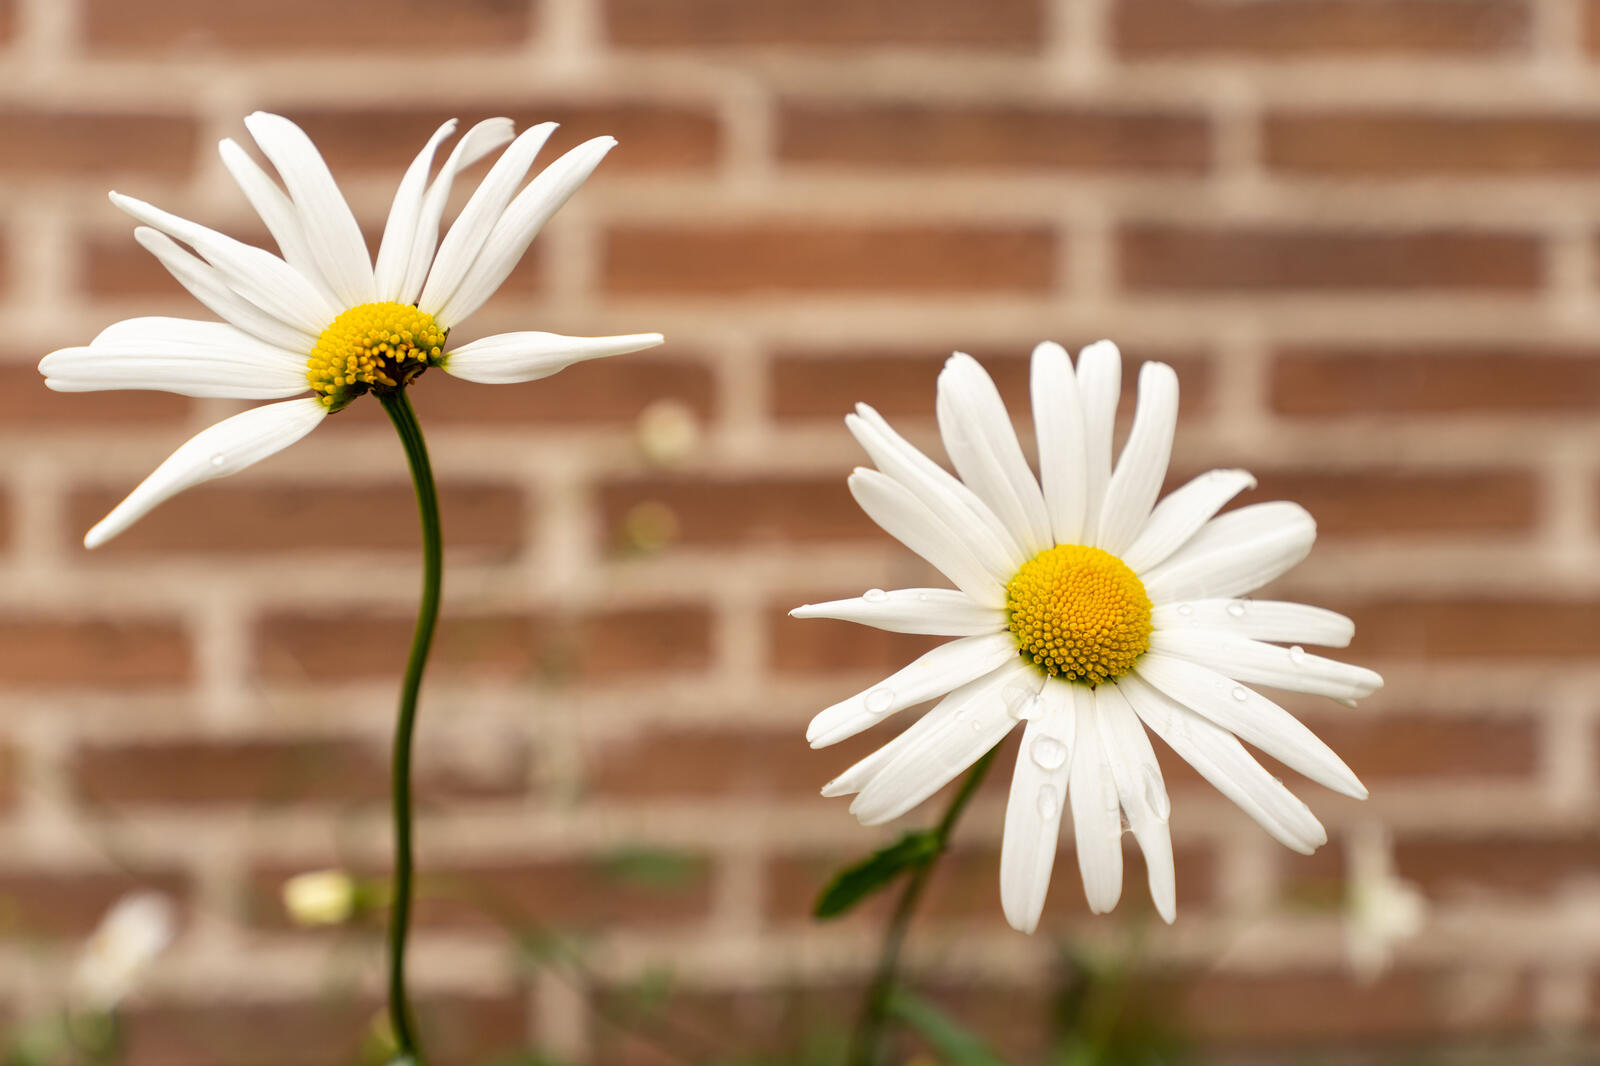 Free photo Two white daisies against a blurry brick wall